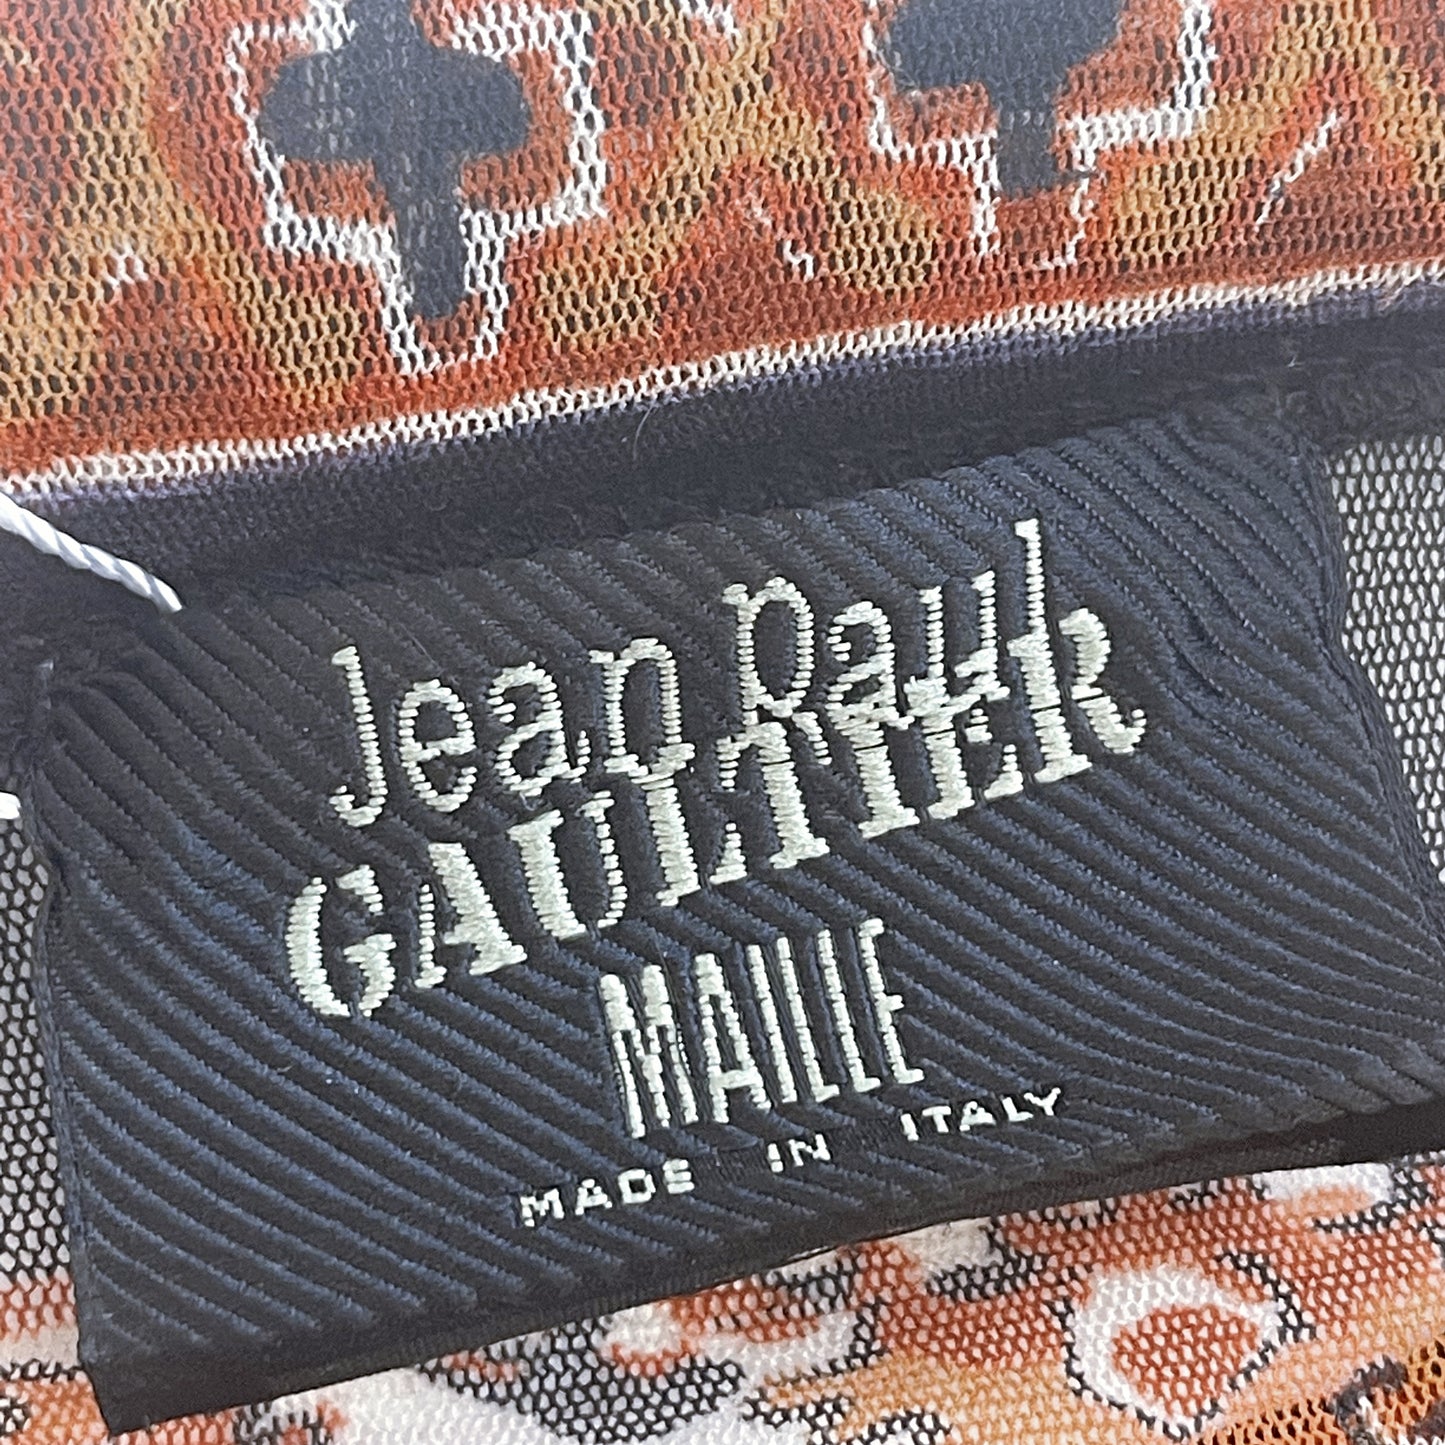 Vintage Jean Paul Gaultier Maille Mesh Top 90’s